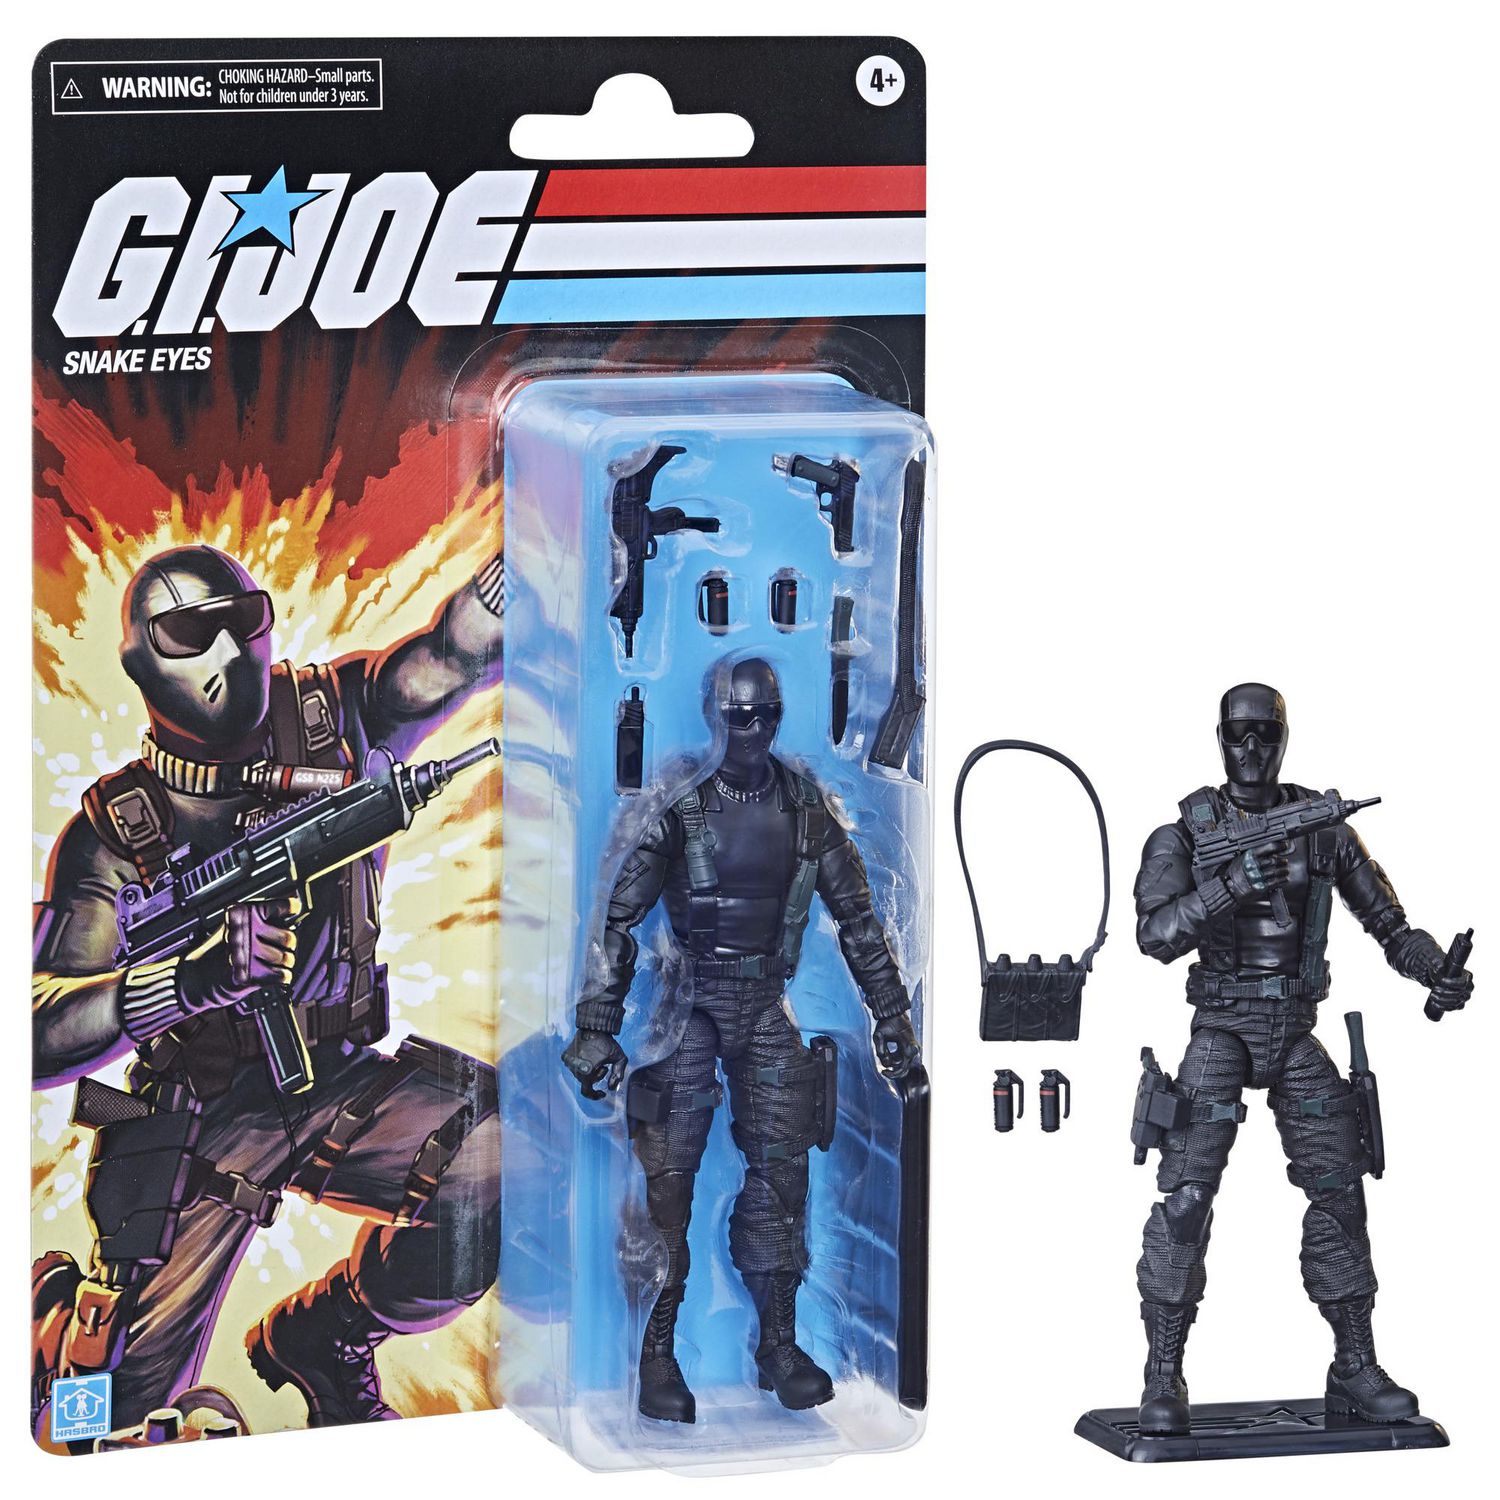 G.I. Joe Classified Series Snake Eyes Action Figure, 6-Inch